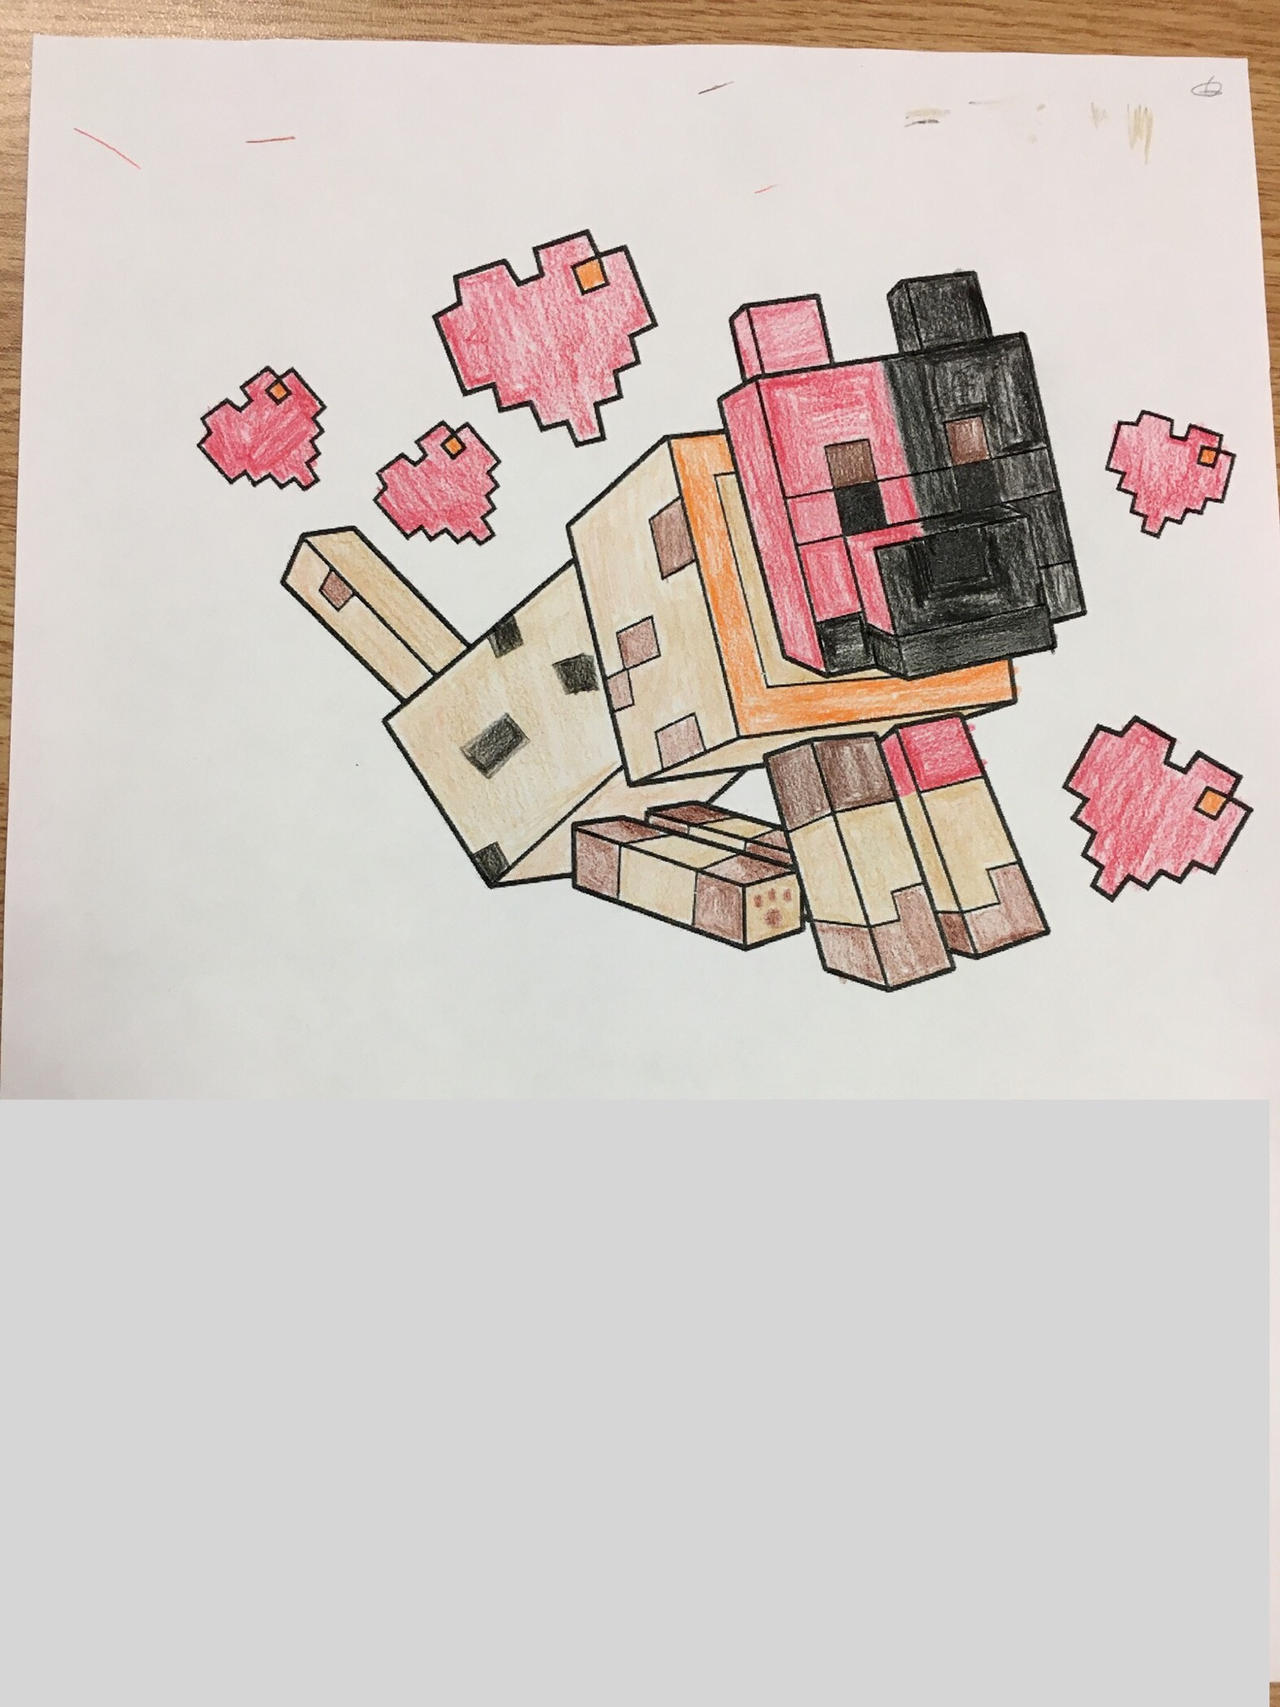 Minecraft Dog and Cat 360 Minecraft Art Classic . Art Print for